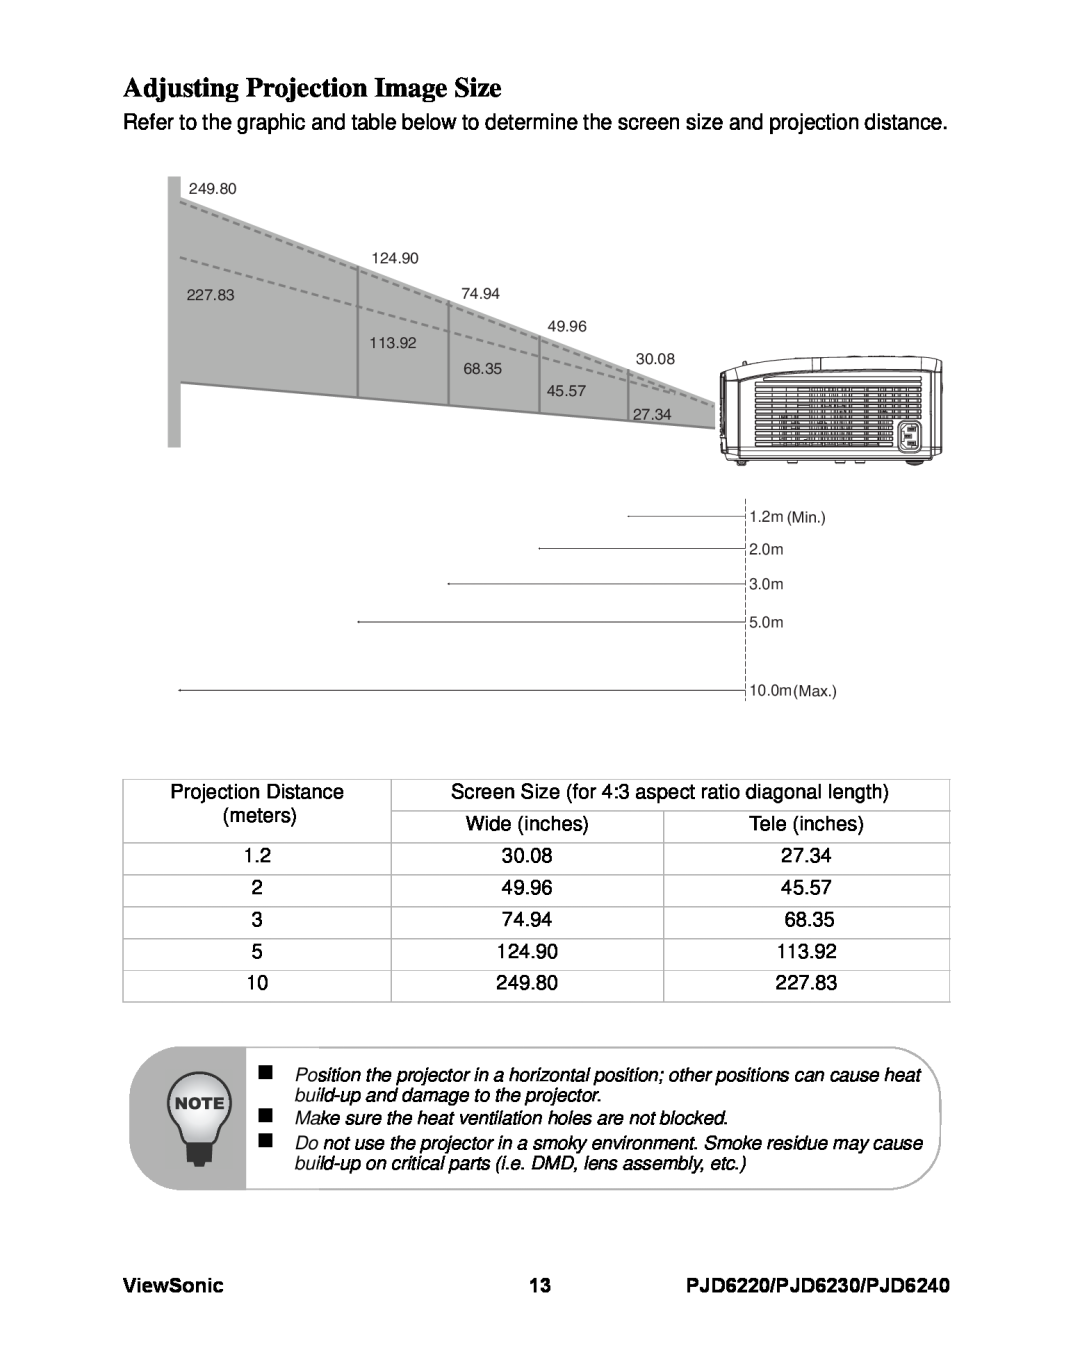 ViewSonic warranty Adjusting Projection Image Size, ViewSonic, PJD6220/PJD6230/PJD6240 